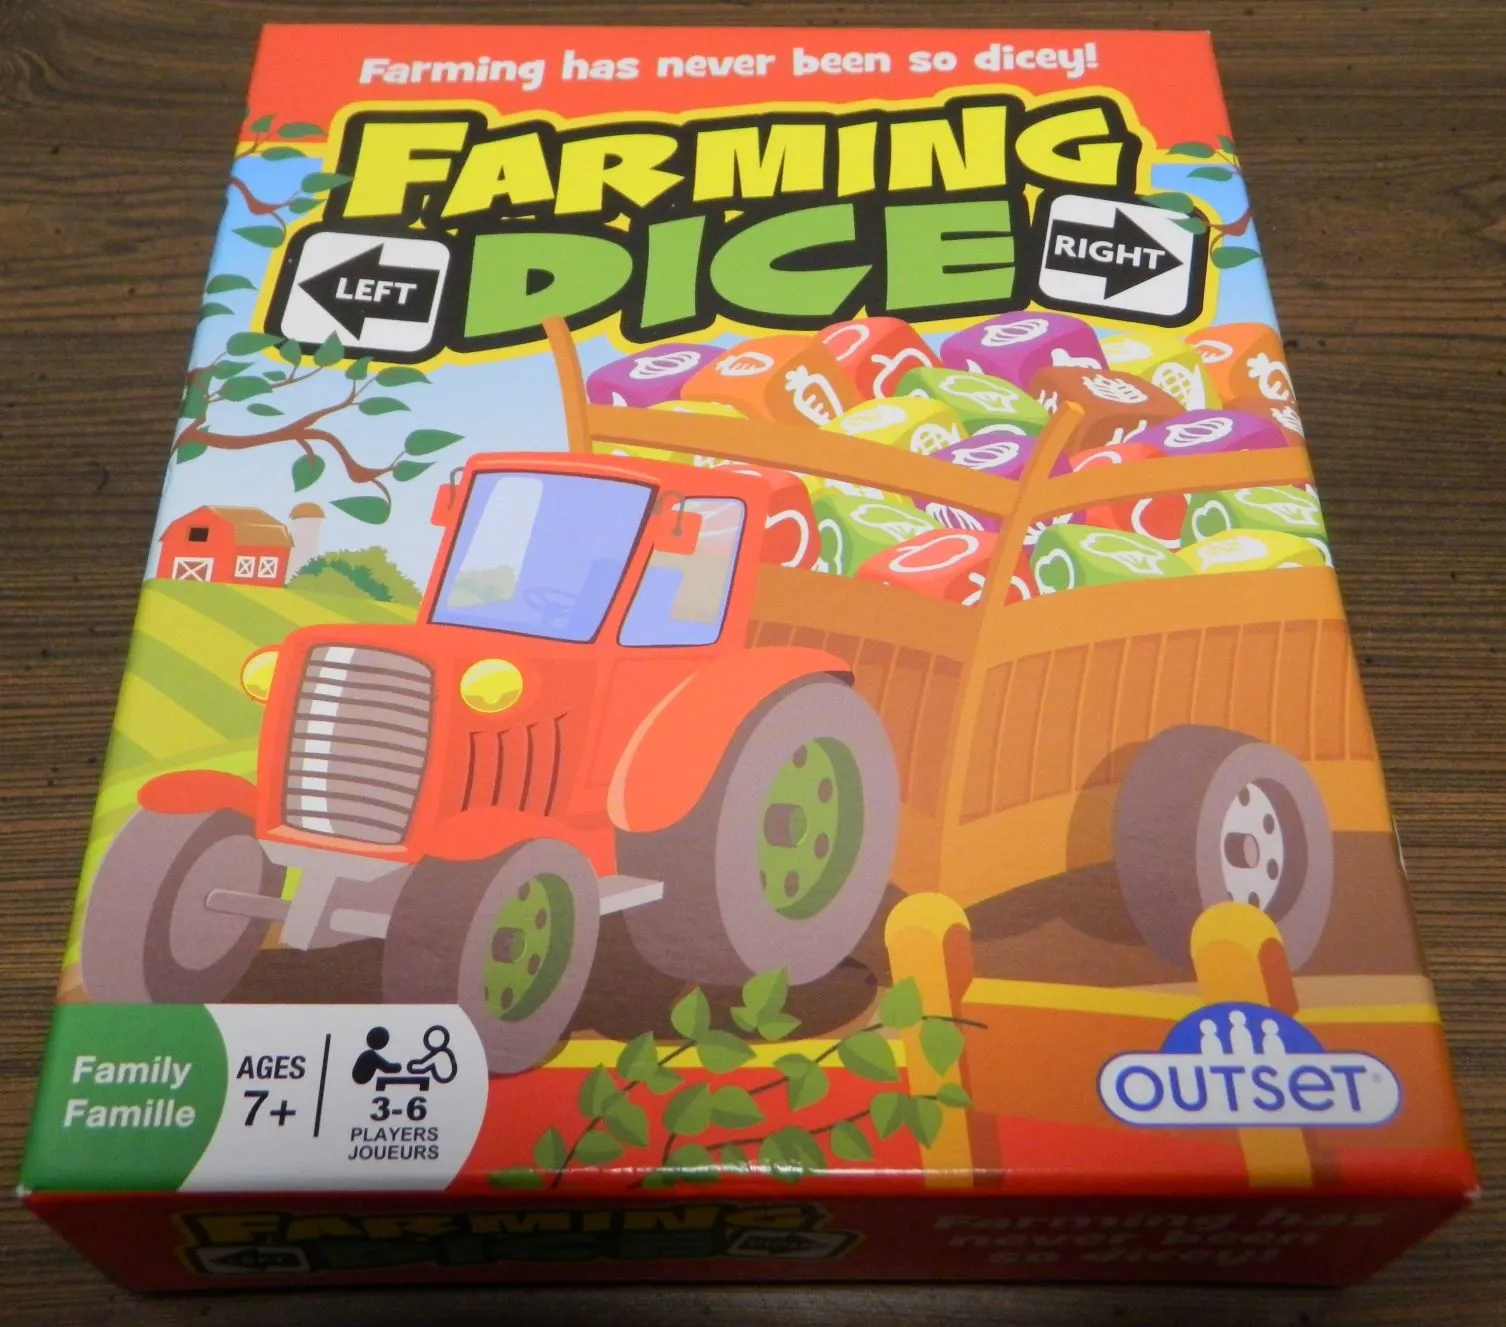 Box for Farming Dice